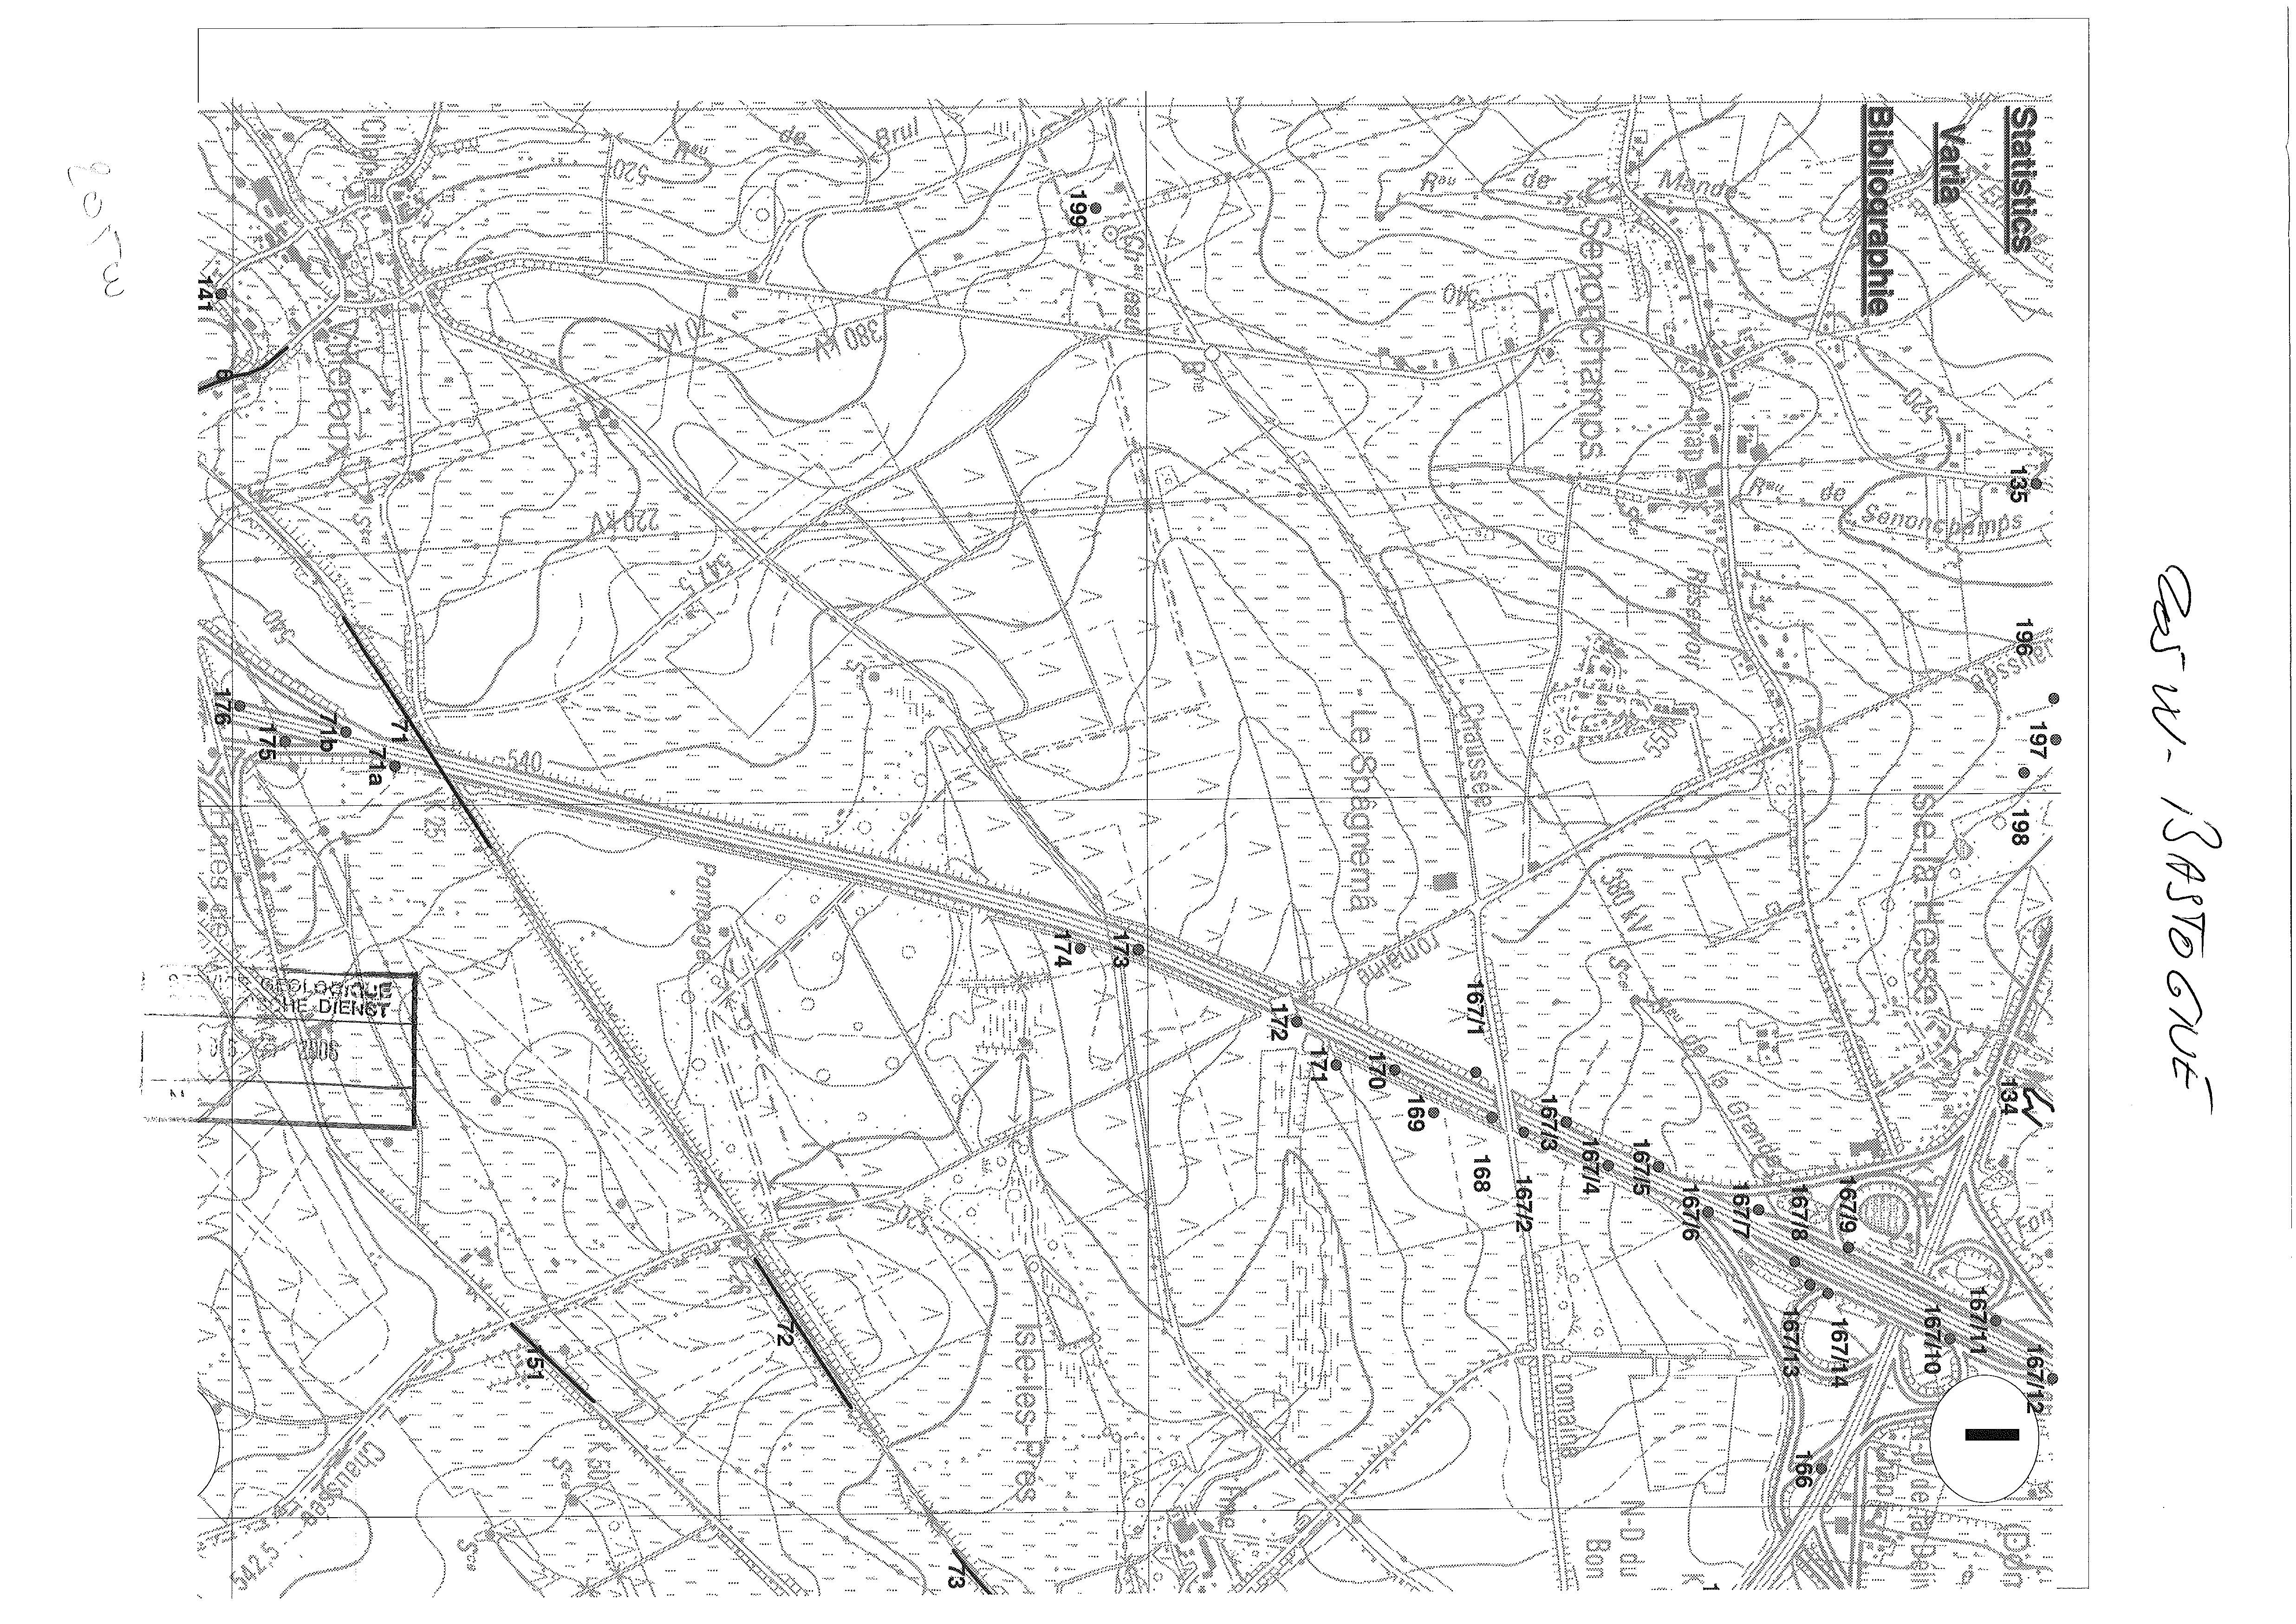 205W_Bastogne_Page_1_Image_0001.jpg